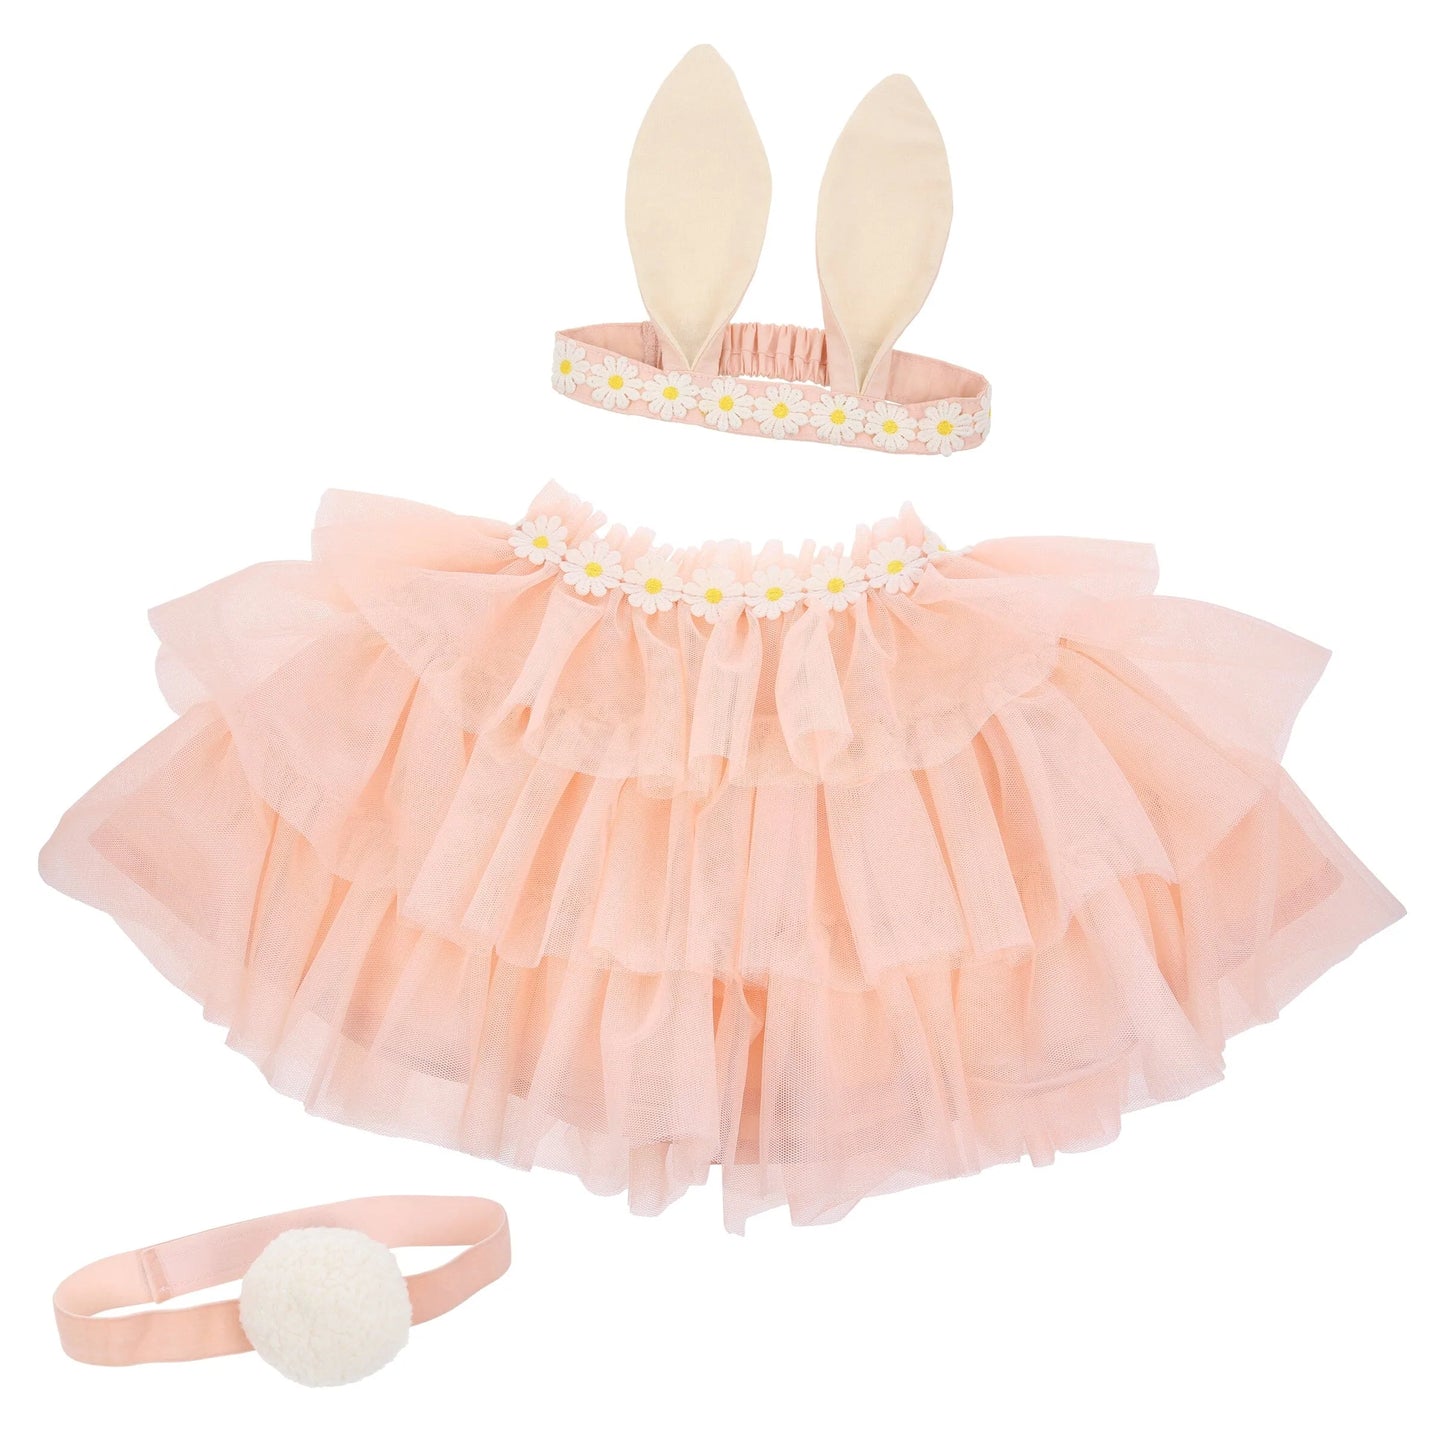 Meri Meri Peach tulle bunny costume dress up for kids Easter spring party celebration play